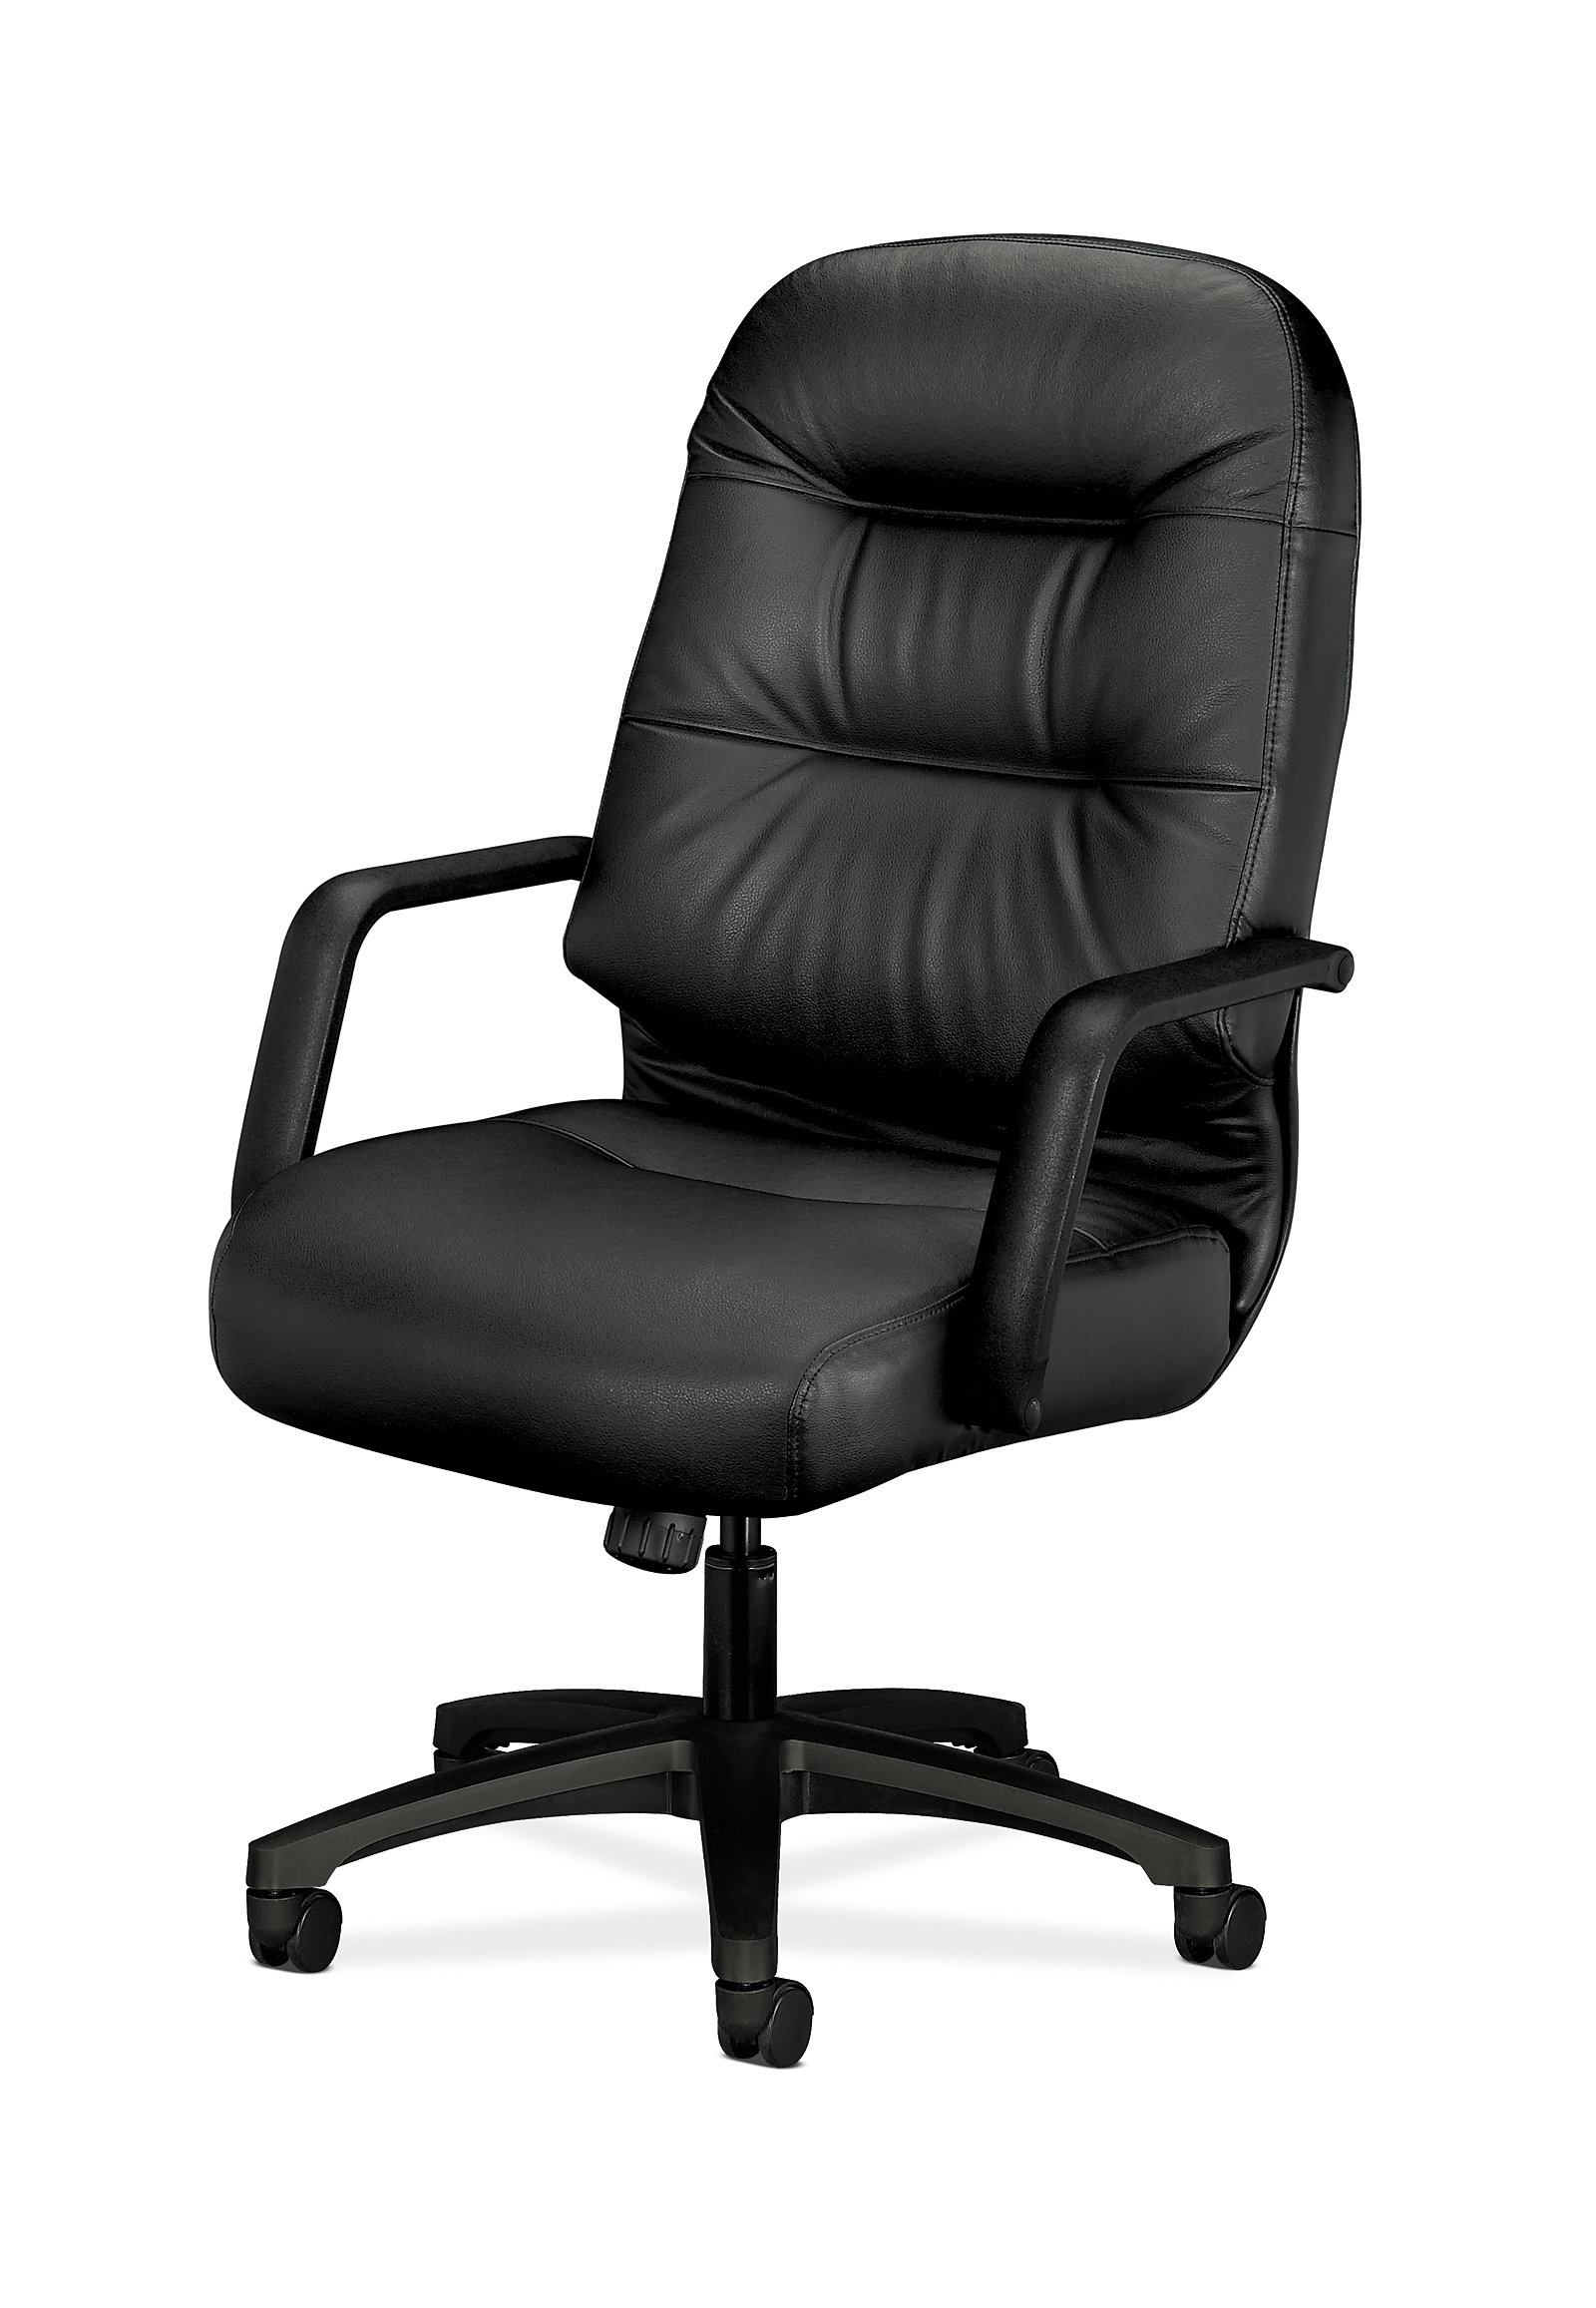 Pillow Soft Executive High Back Chair H2091 Hon Office Furniture